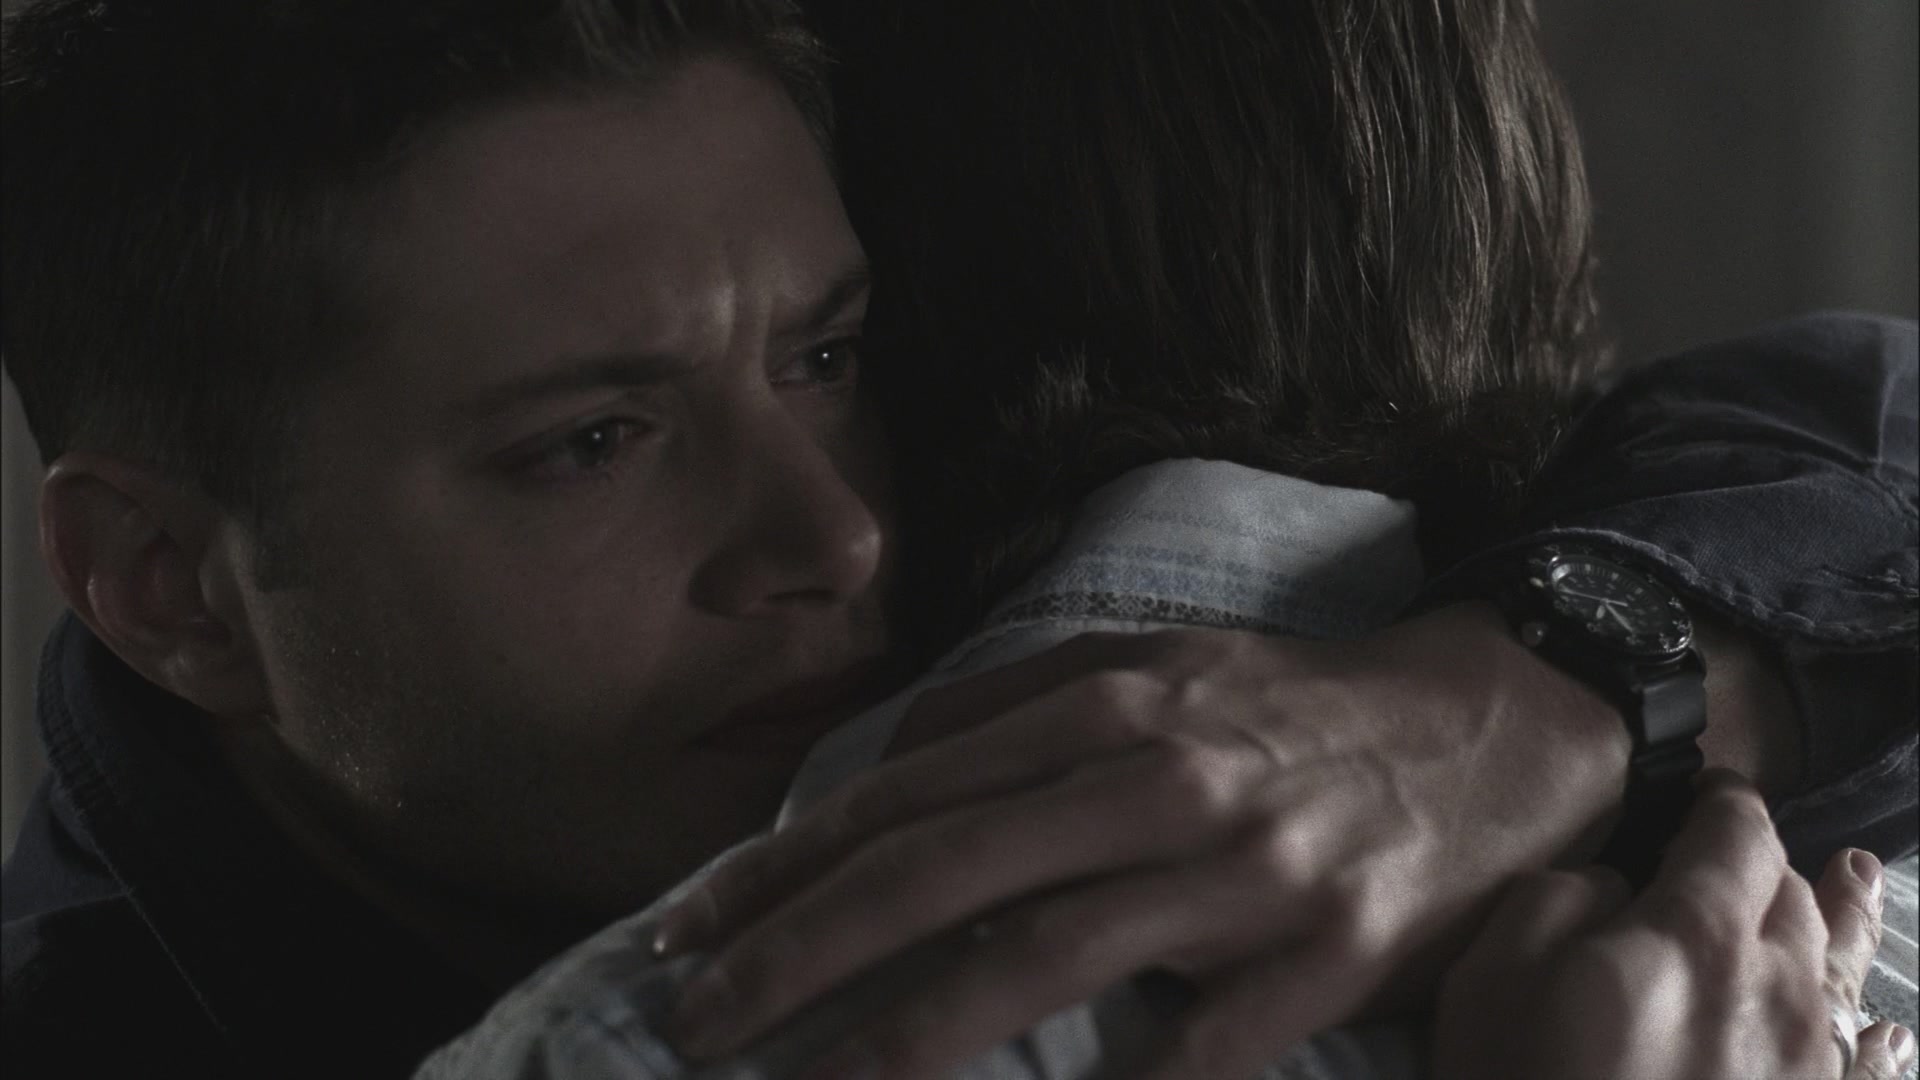 Dean hugging Sam